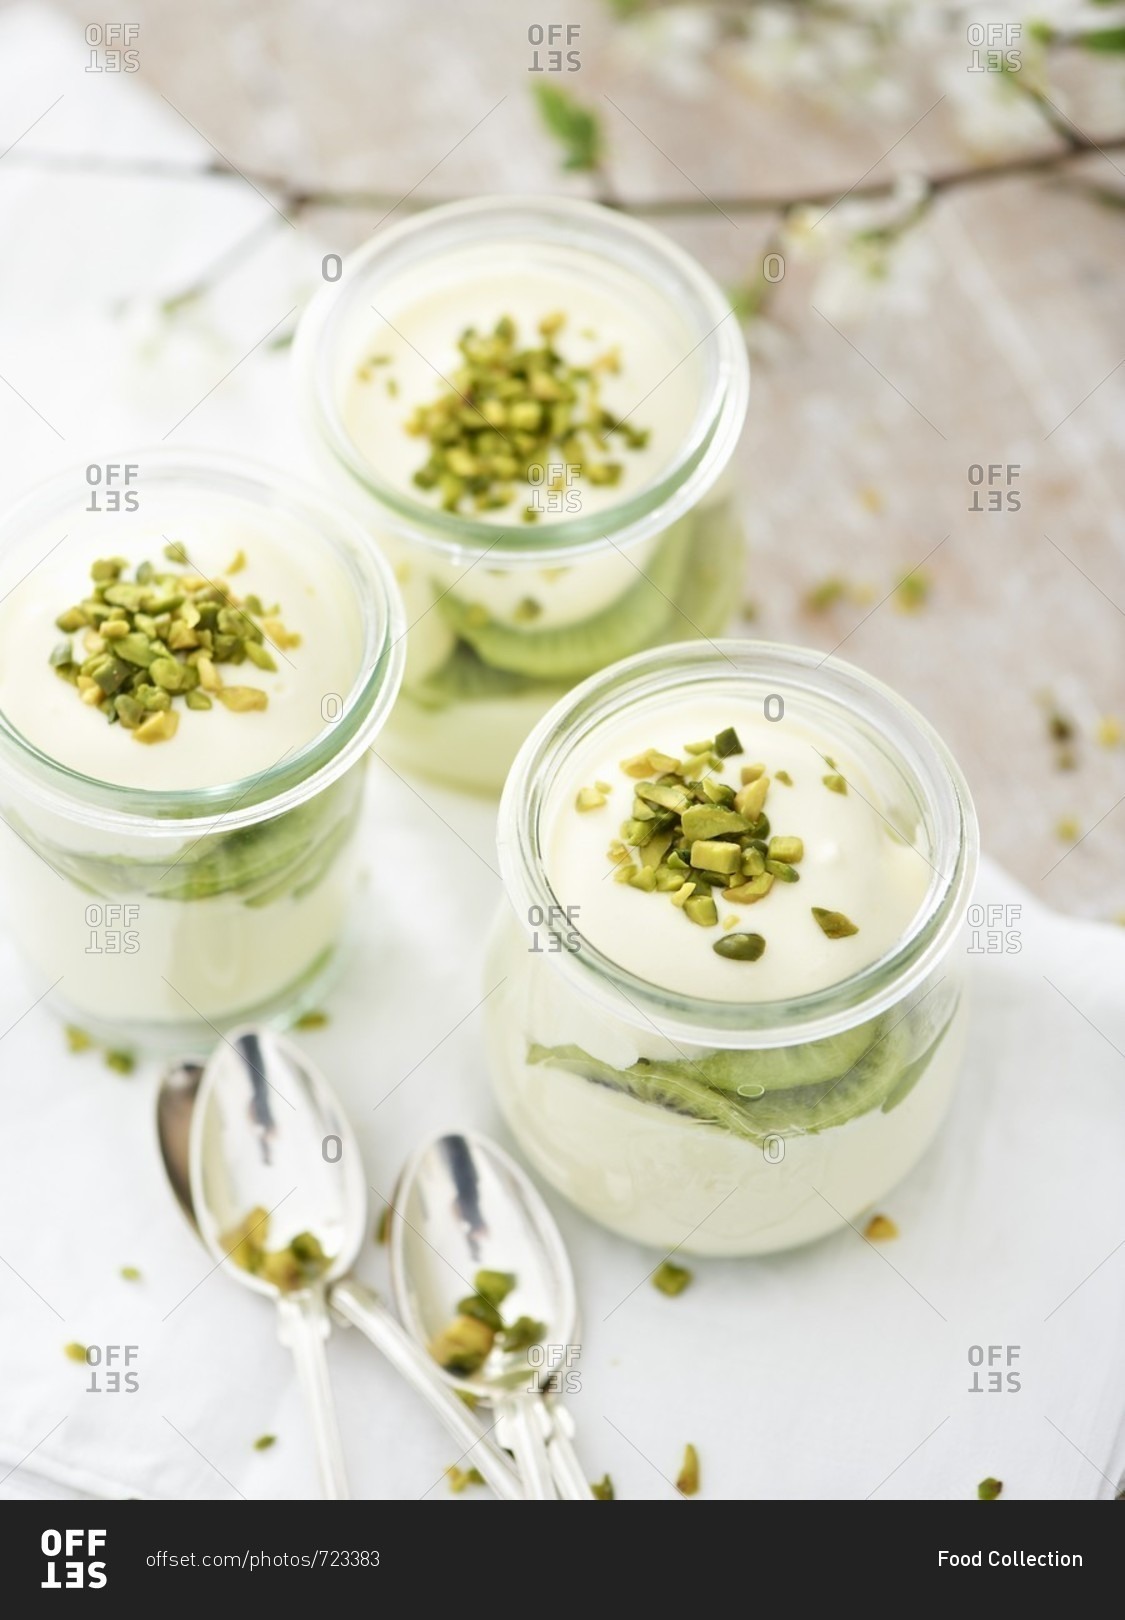 Mascarpone desserts with kiwis and pistachio nuts